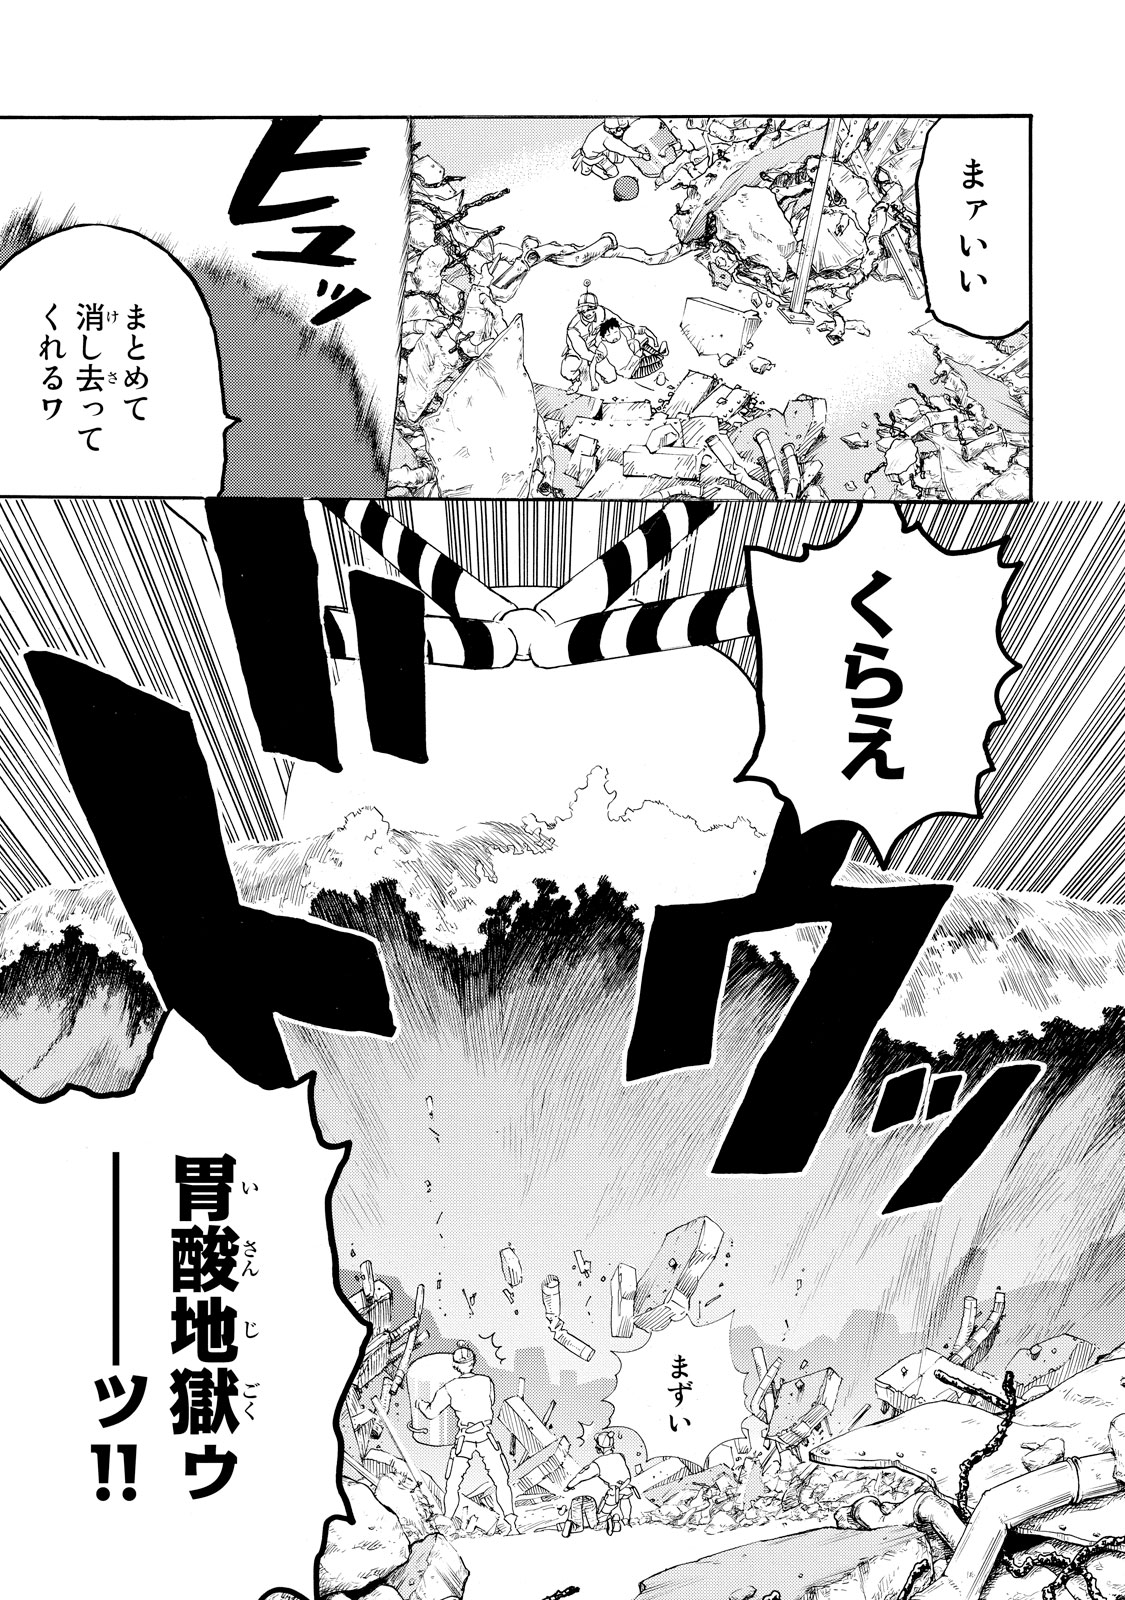 Hataraku Saibou - Chapter 20 - Page 27